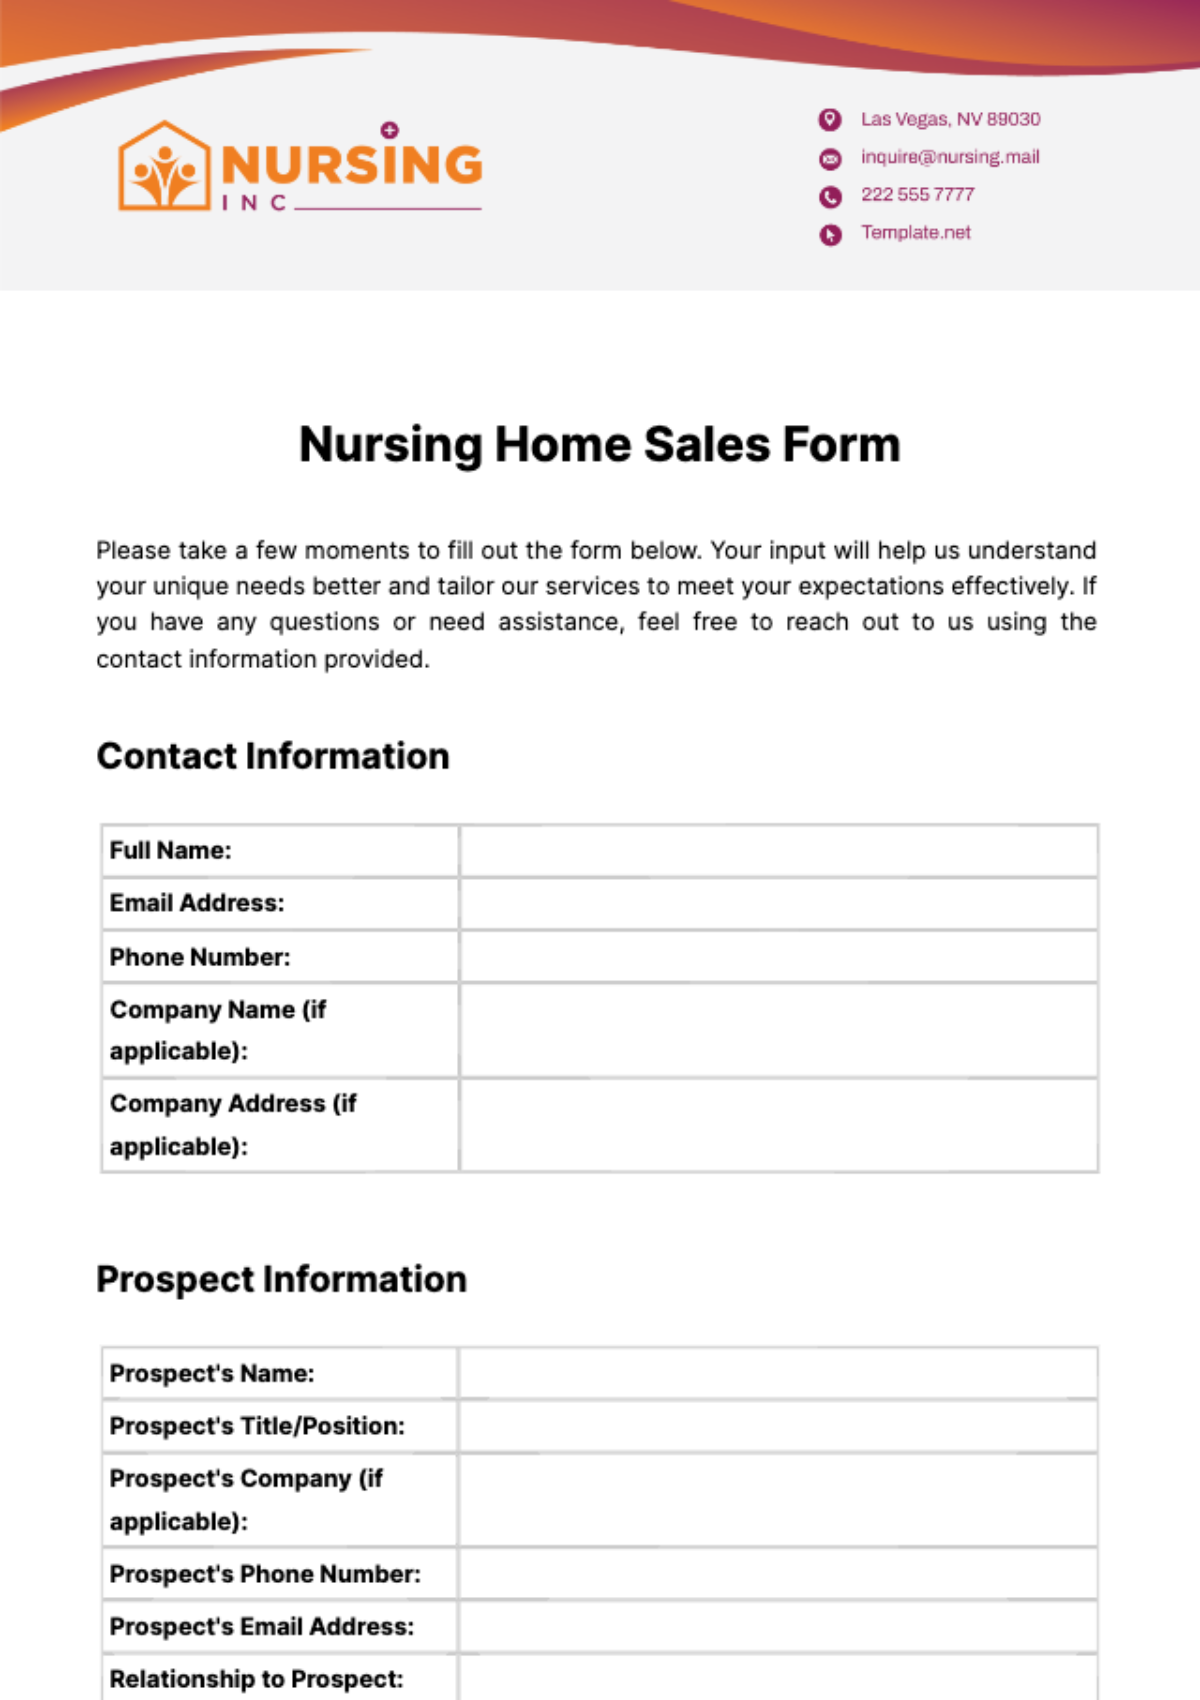 Nursing Home Sales Form Template